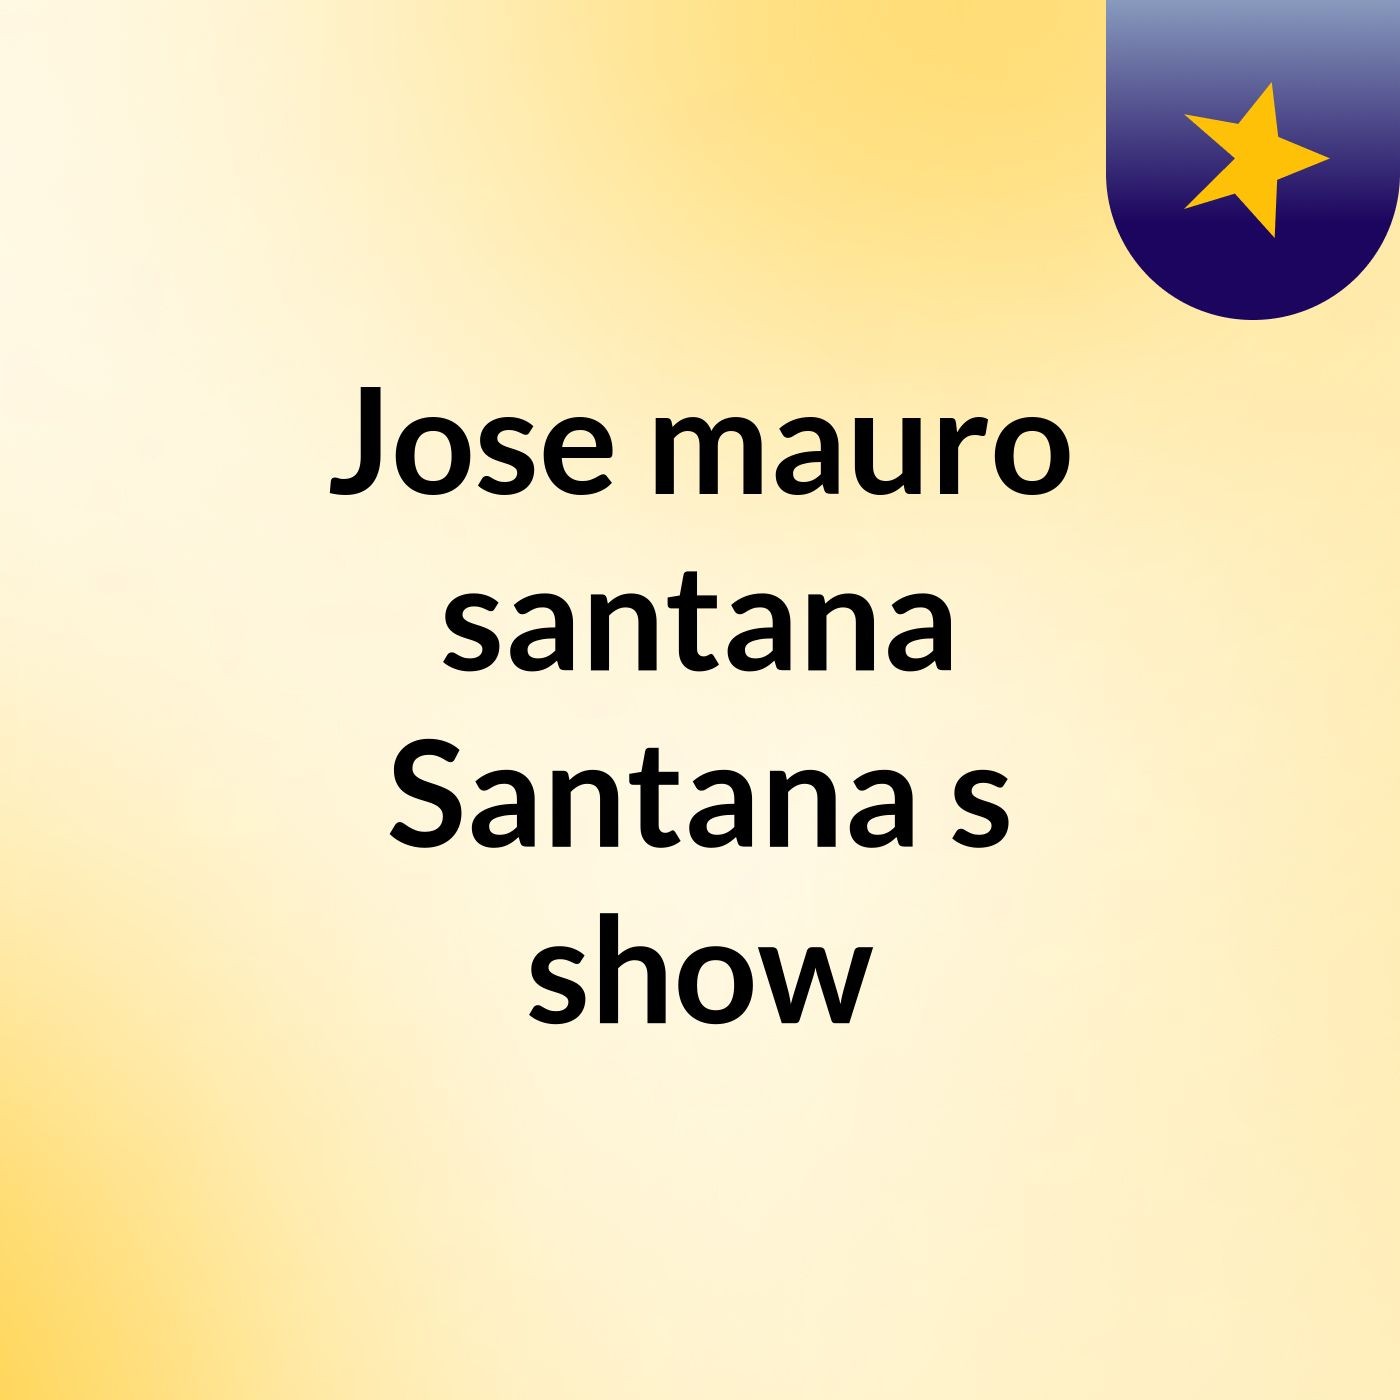 Jose mauro santana Santana's show